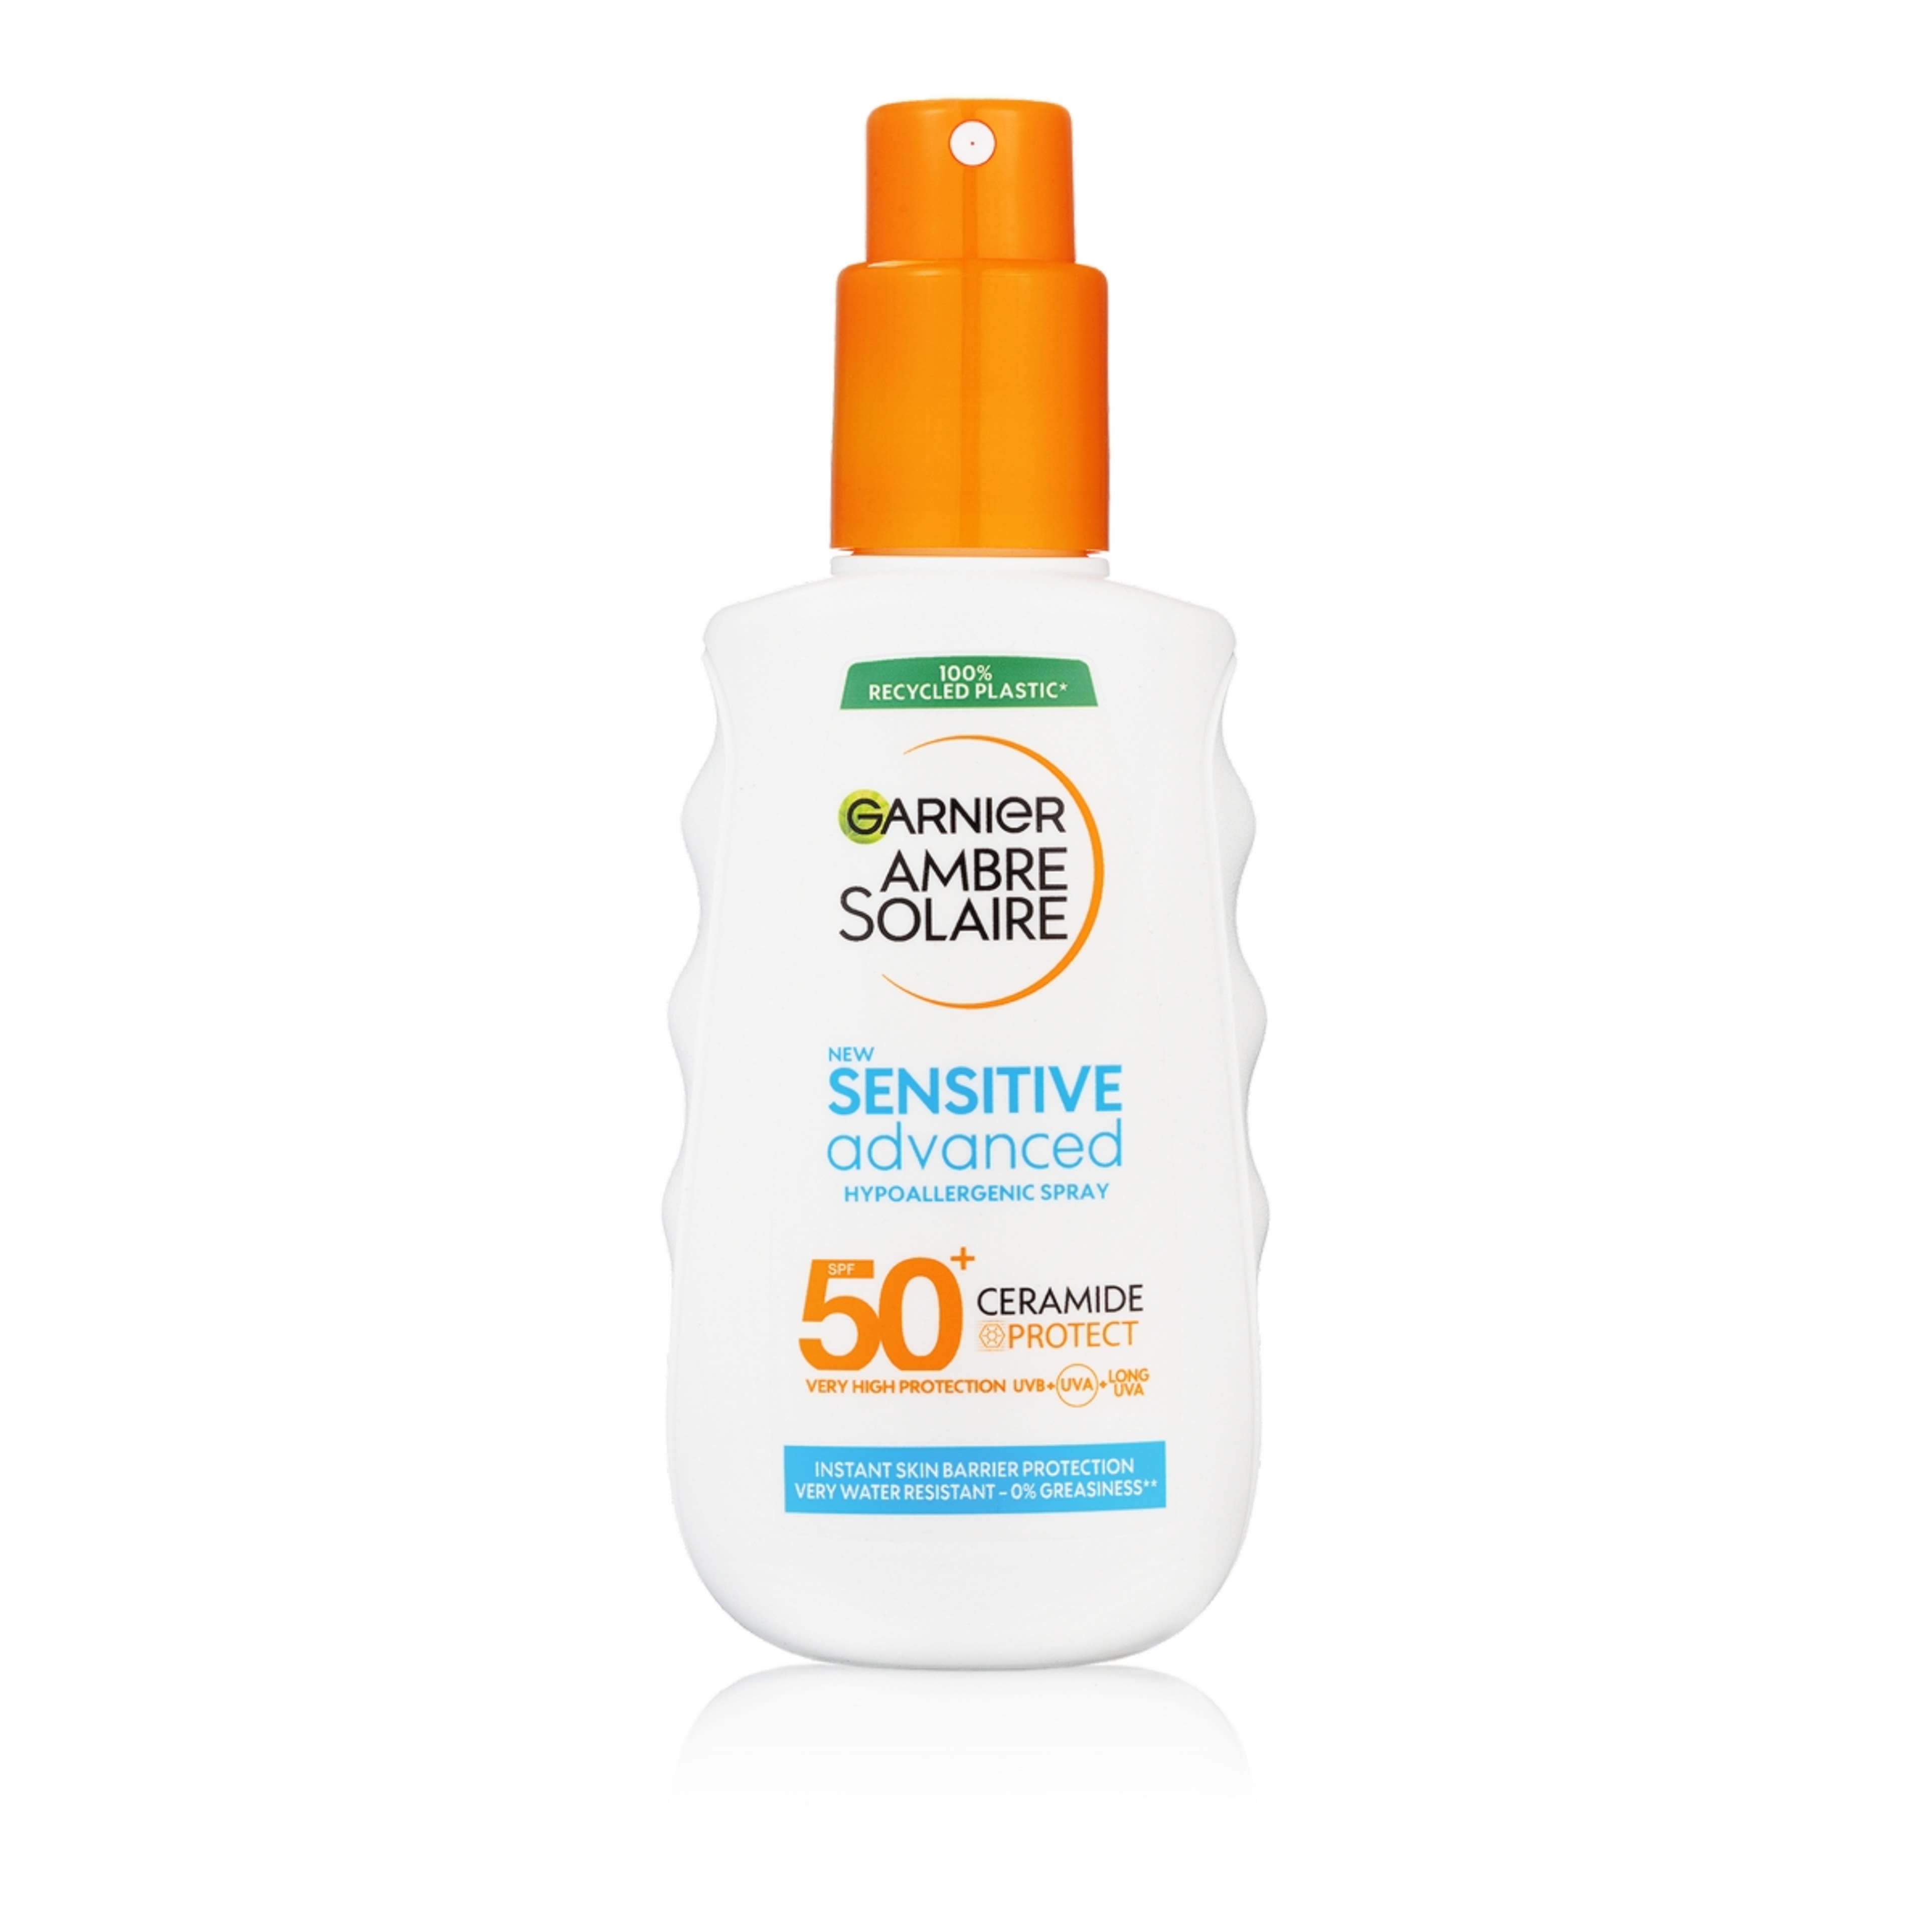 Garnier Ambre Solaire Sensitive Advances spray SPF50  - 150 ml